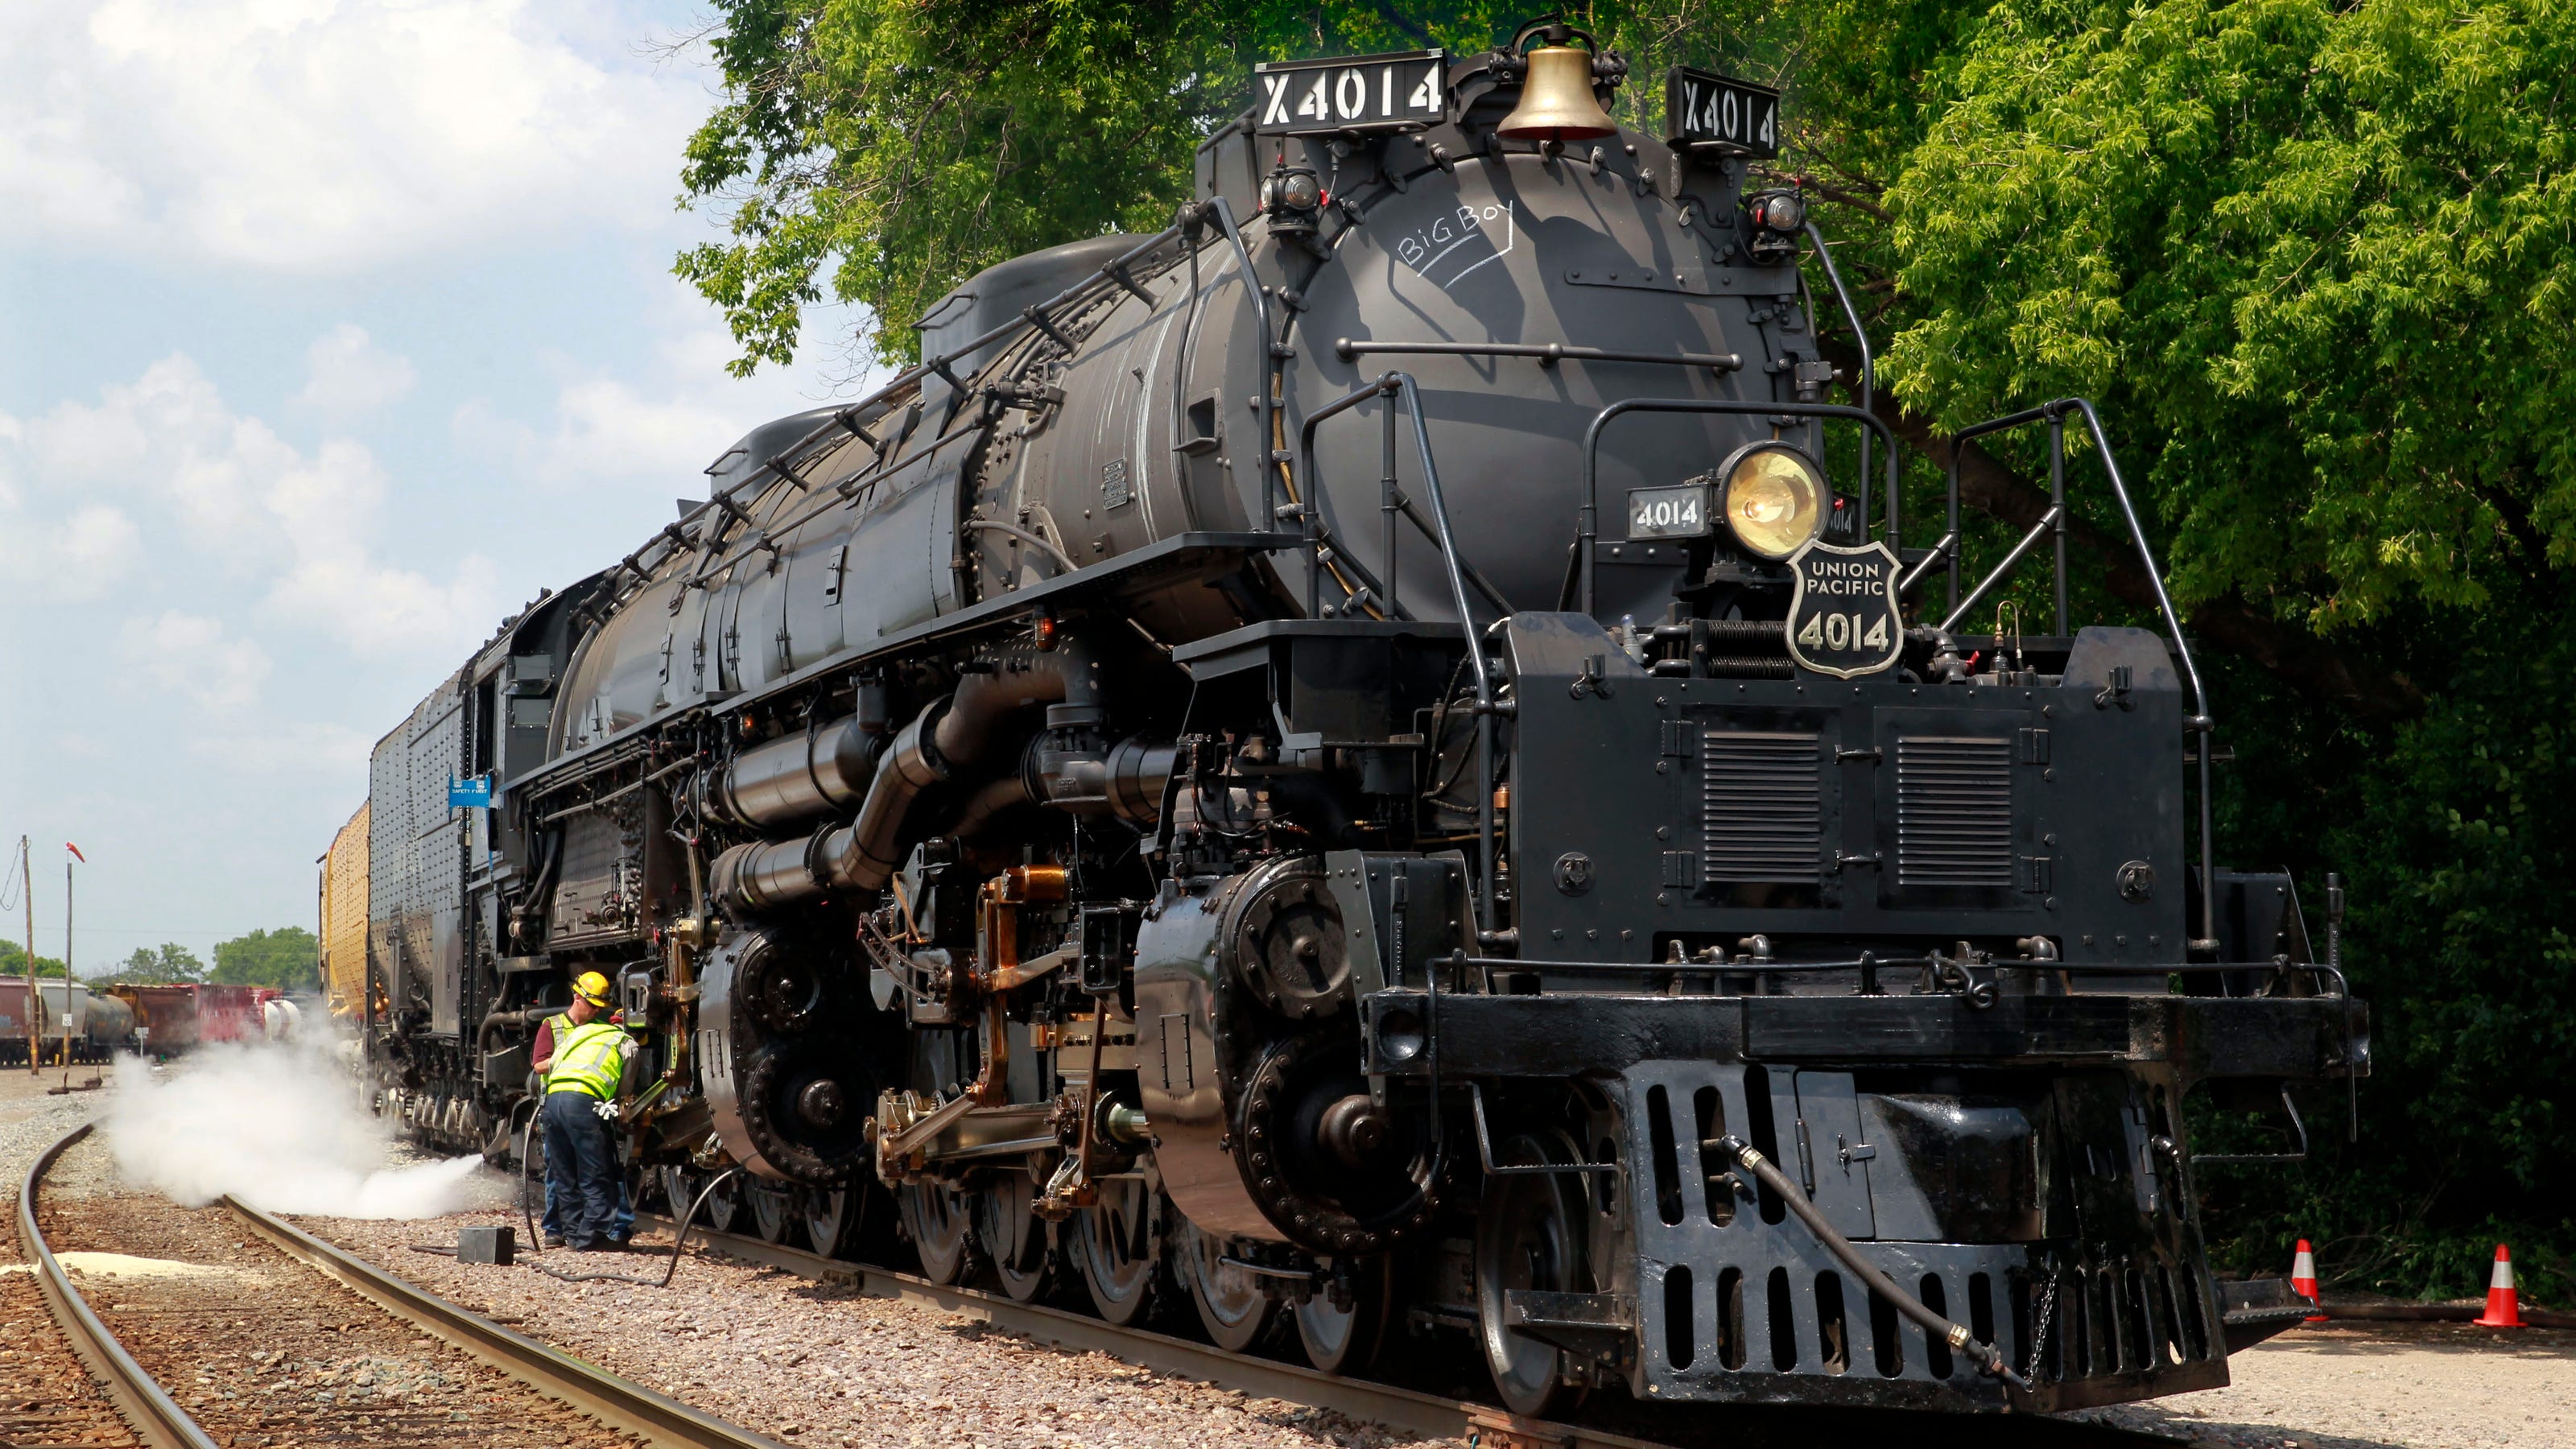 Steam engine Big Boy No. 4014 arrives with fanfare